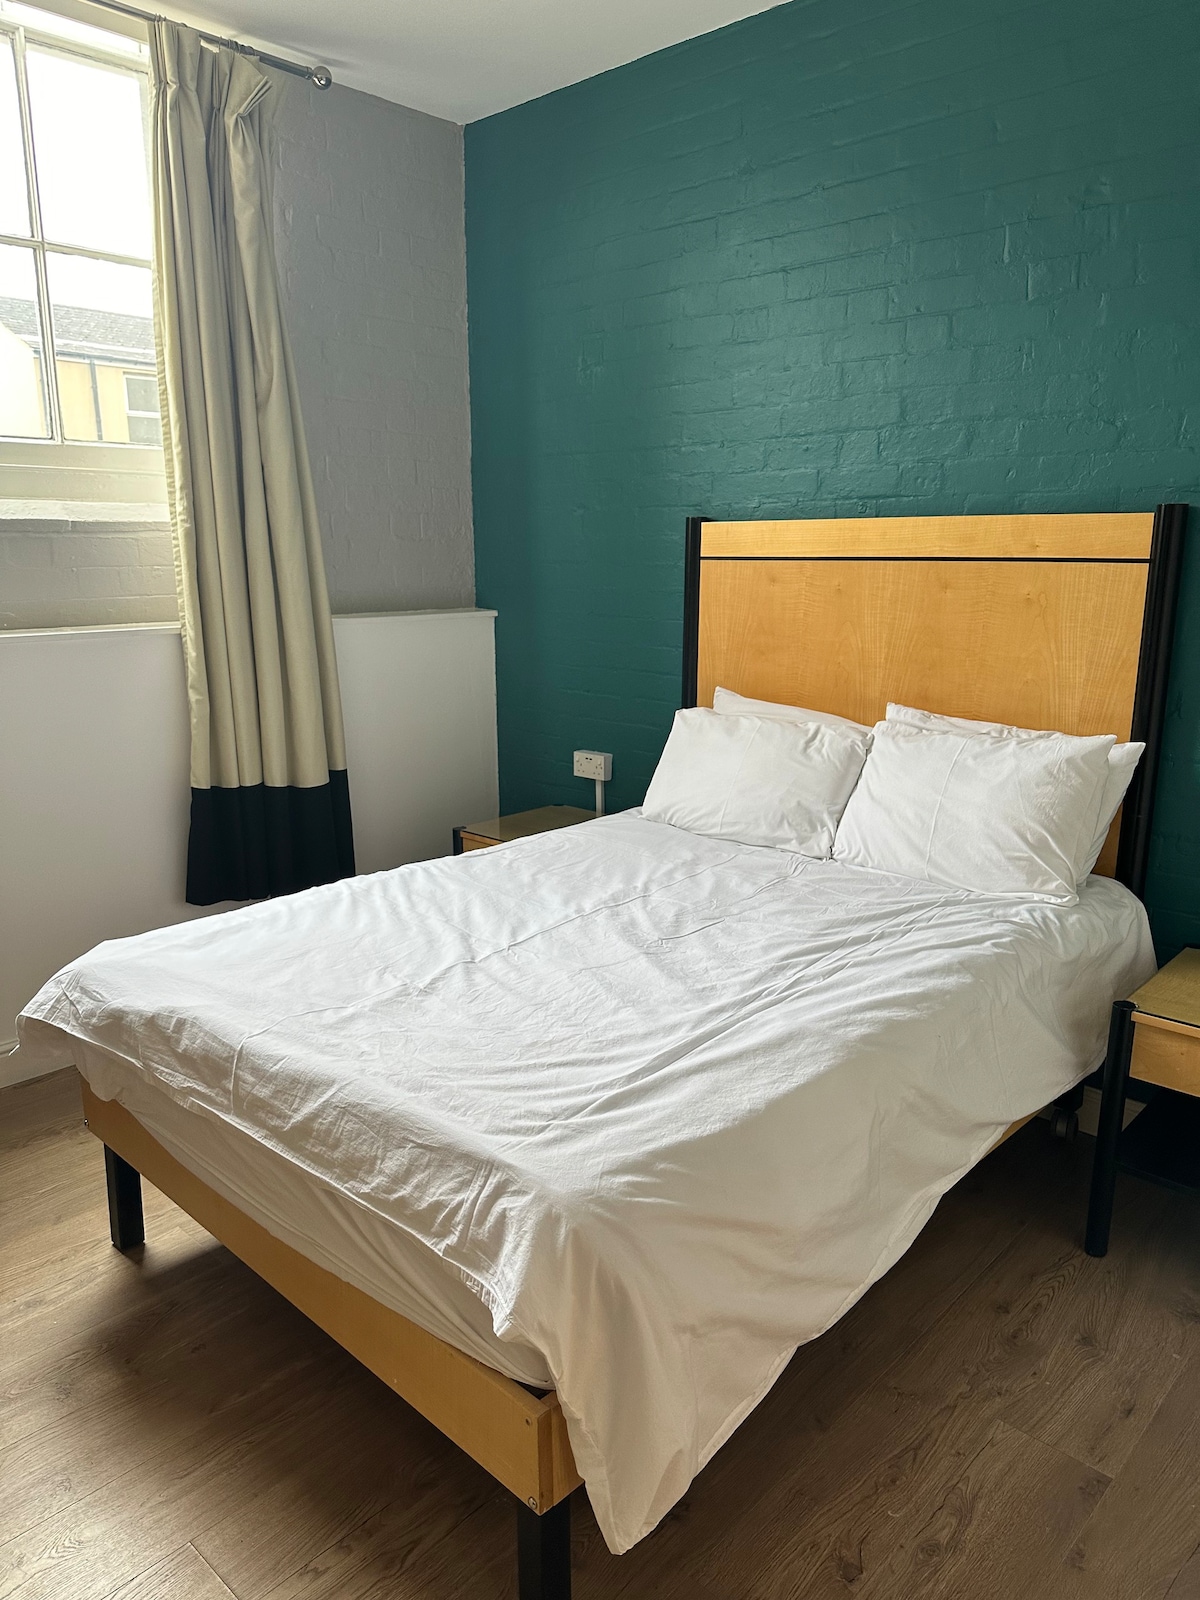 2 bed city centre apartment (82)